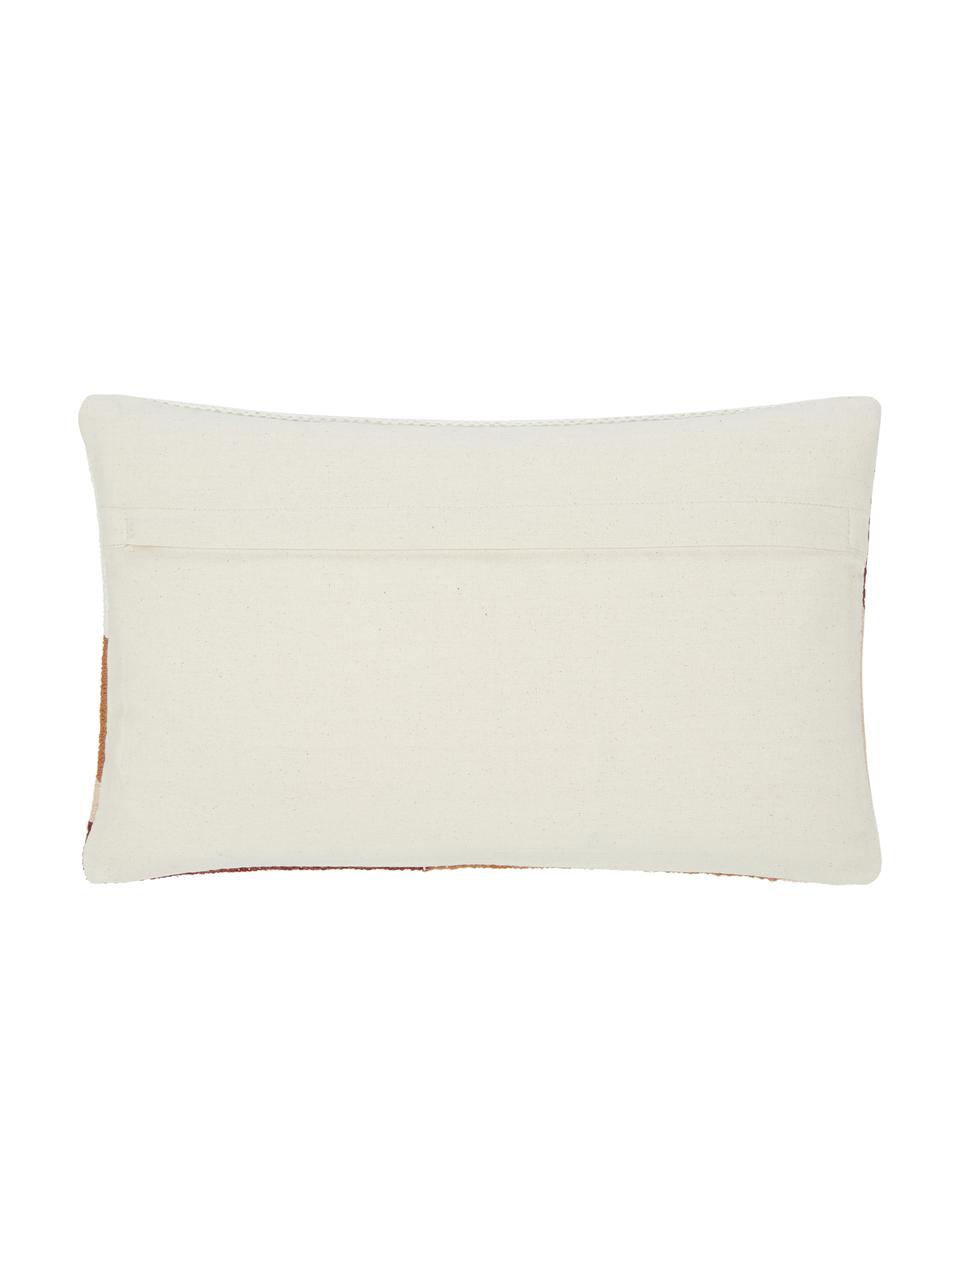 Handgewebte Kissenhülle Beta mit abstraktem Muster, 100% Baumwolle, Rosa, Weiß, B 30 x L 50 cm